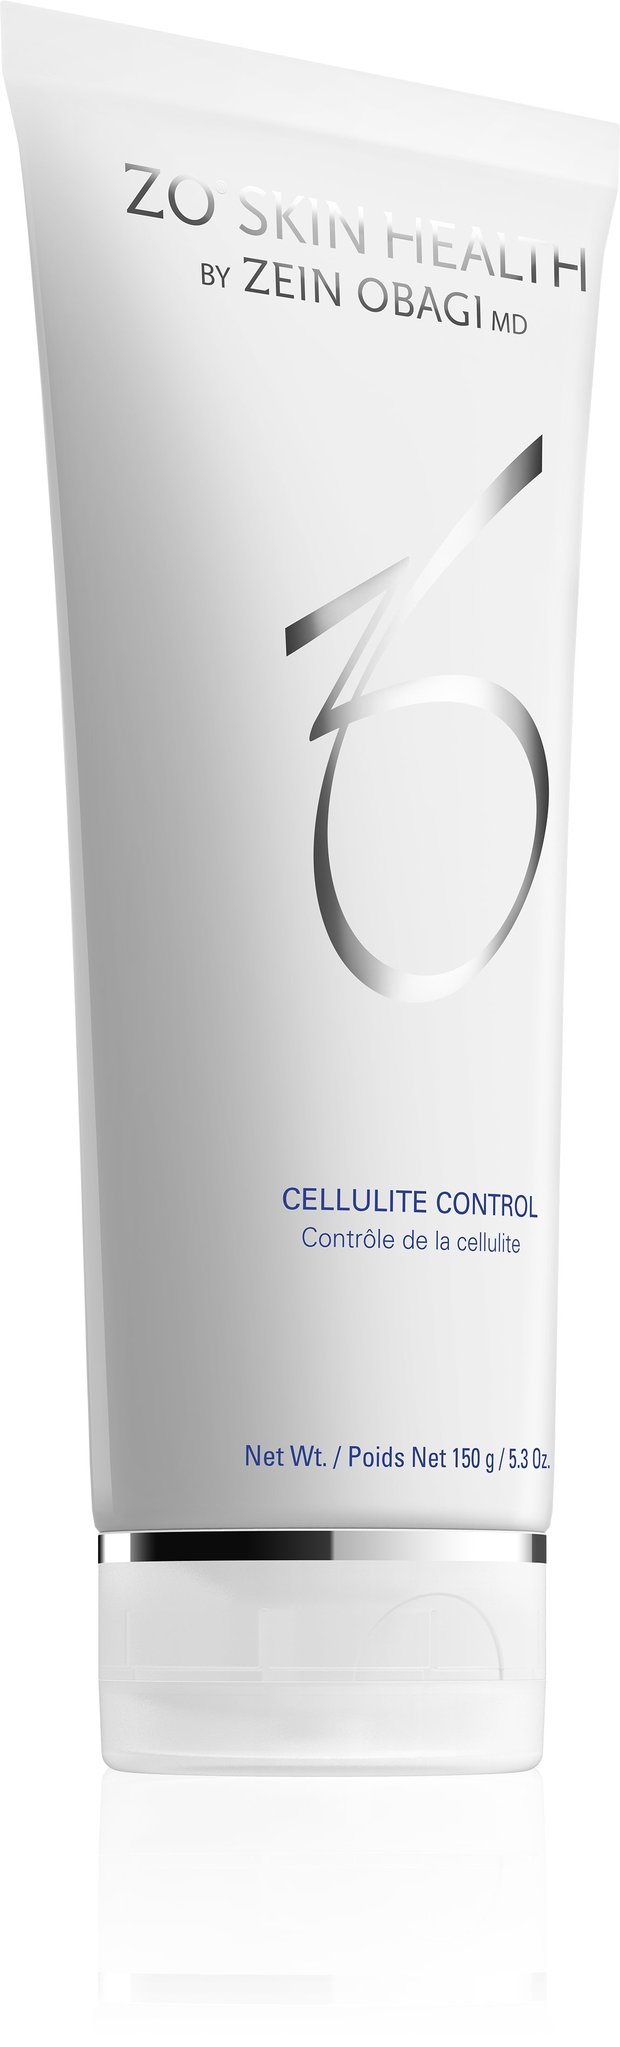 Cellulite-Kontrolle